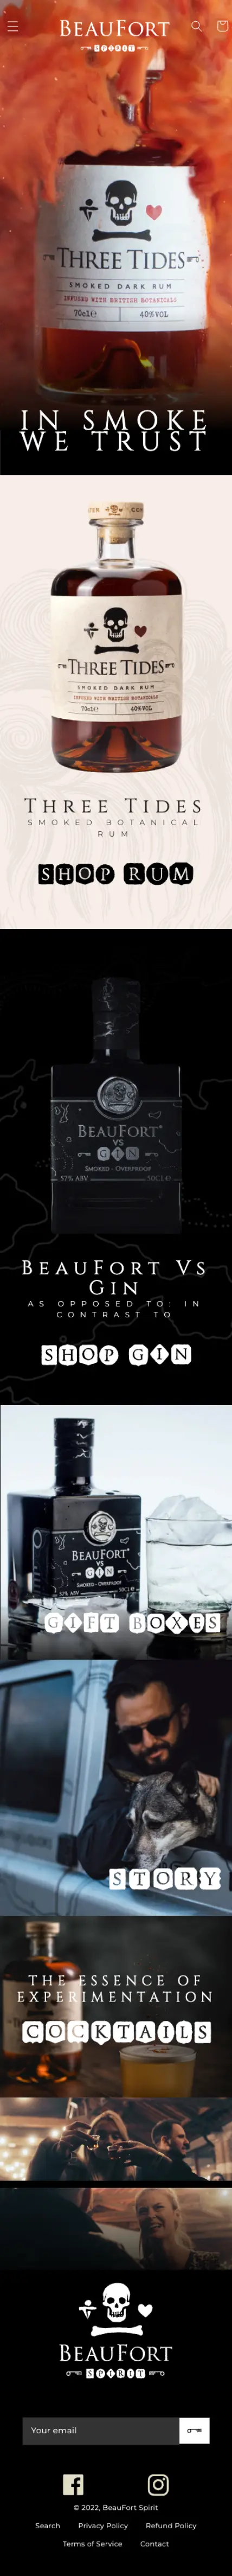 BeauFort Spirit website on a mobile device